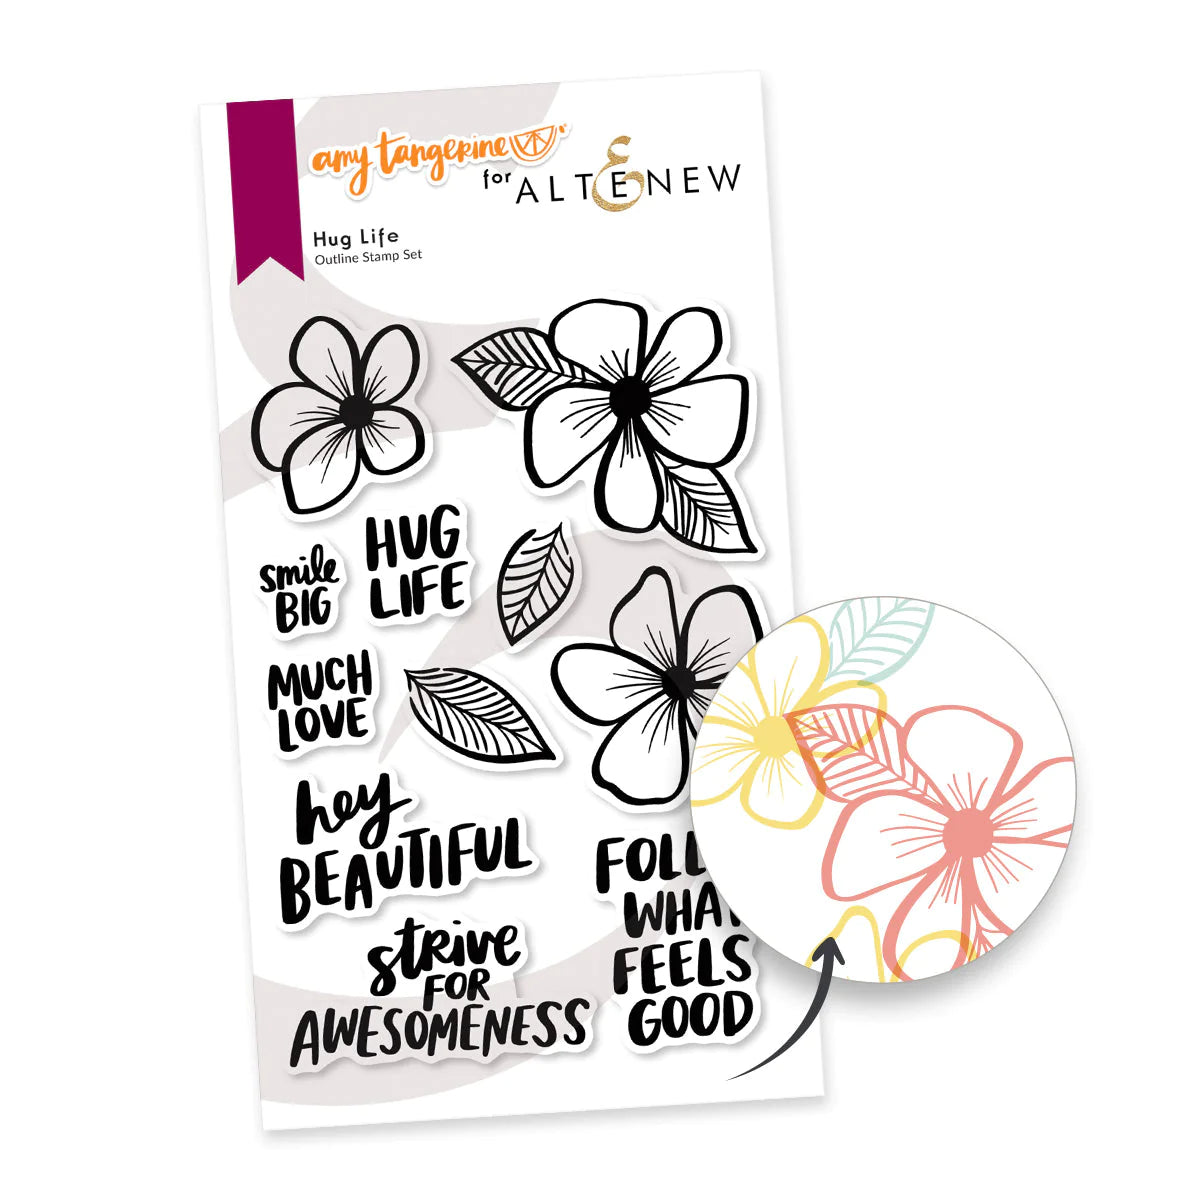 Altenew - Amy Tangerine - Hug Life Stamp Set and Die Set